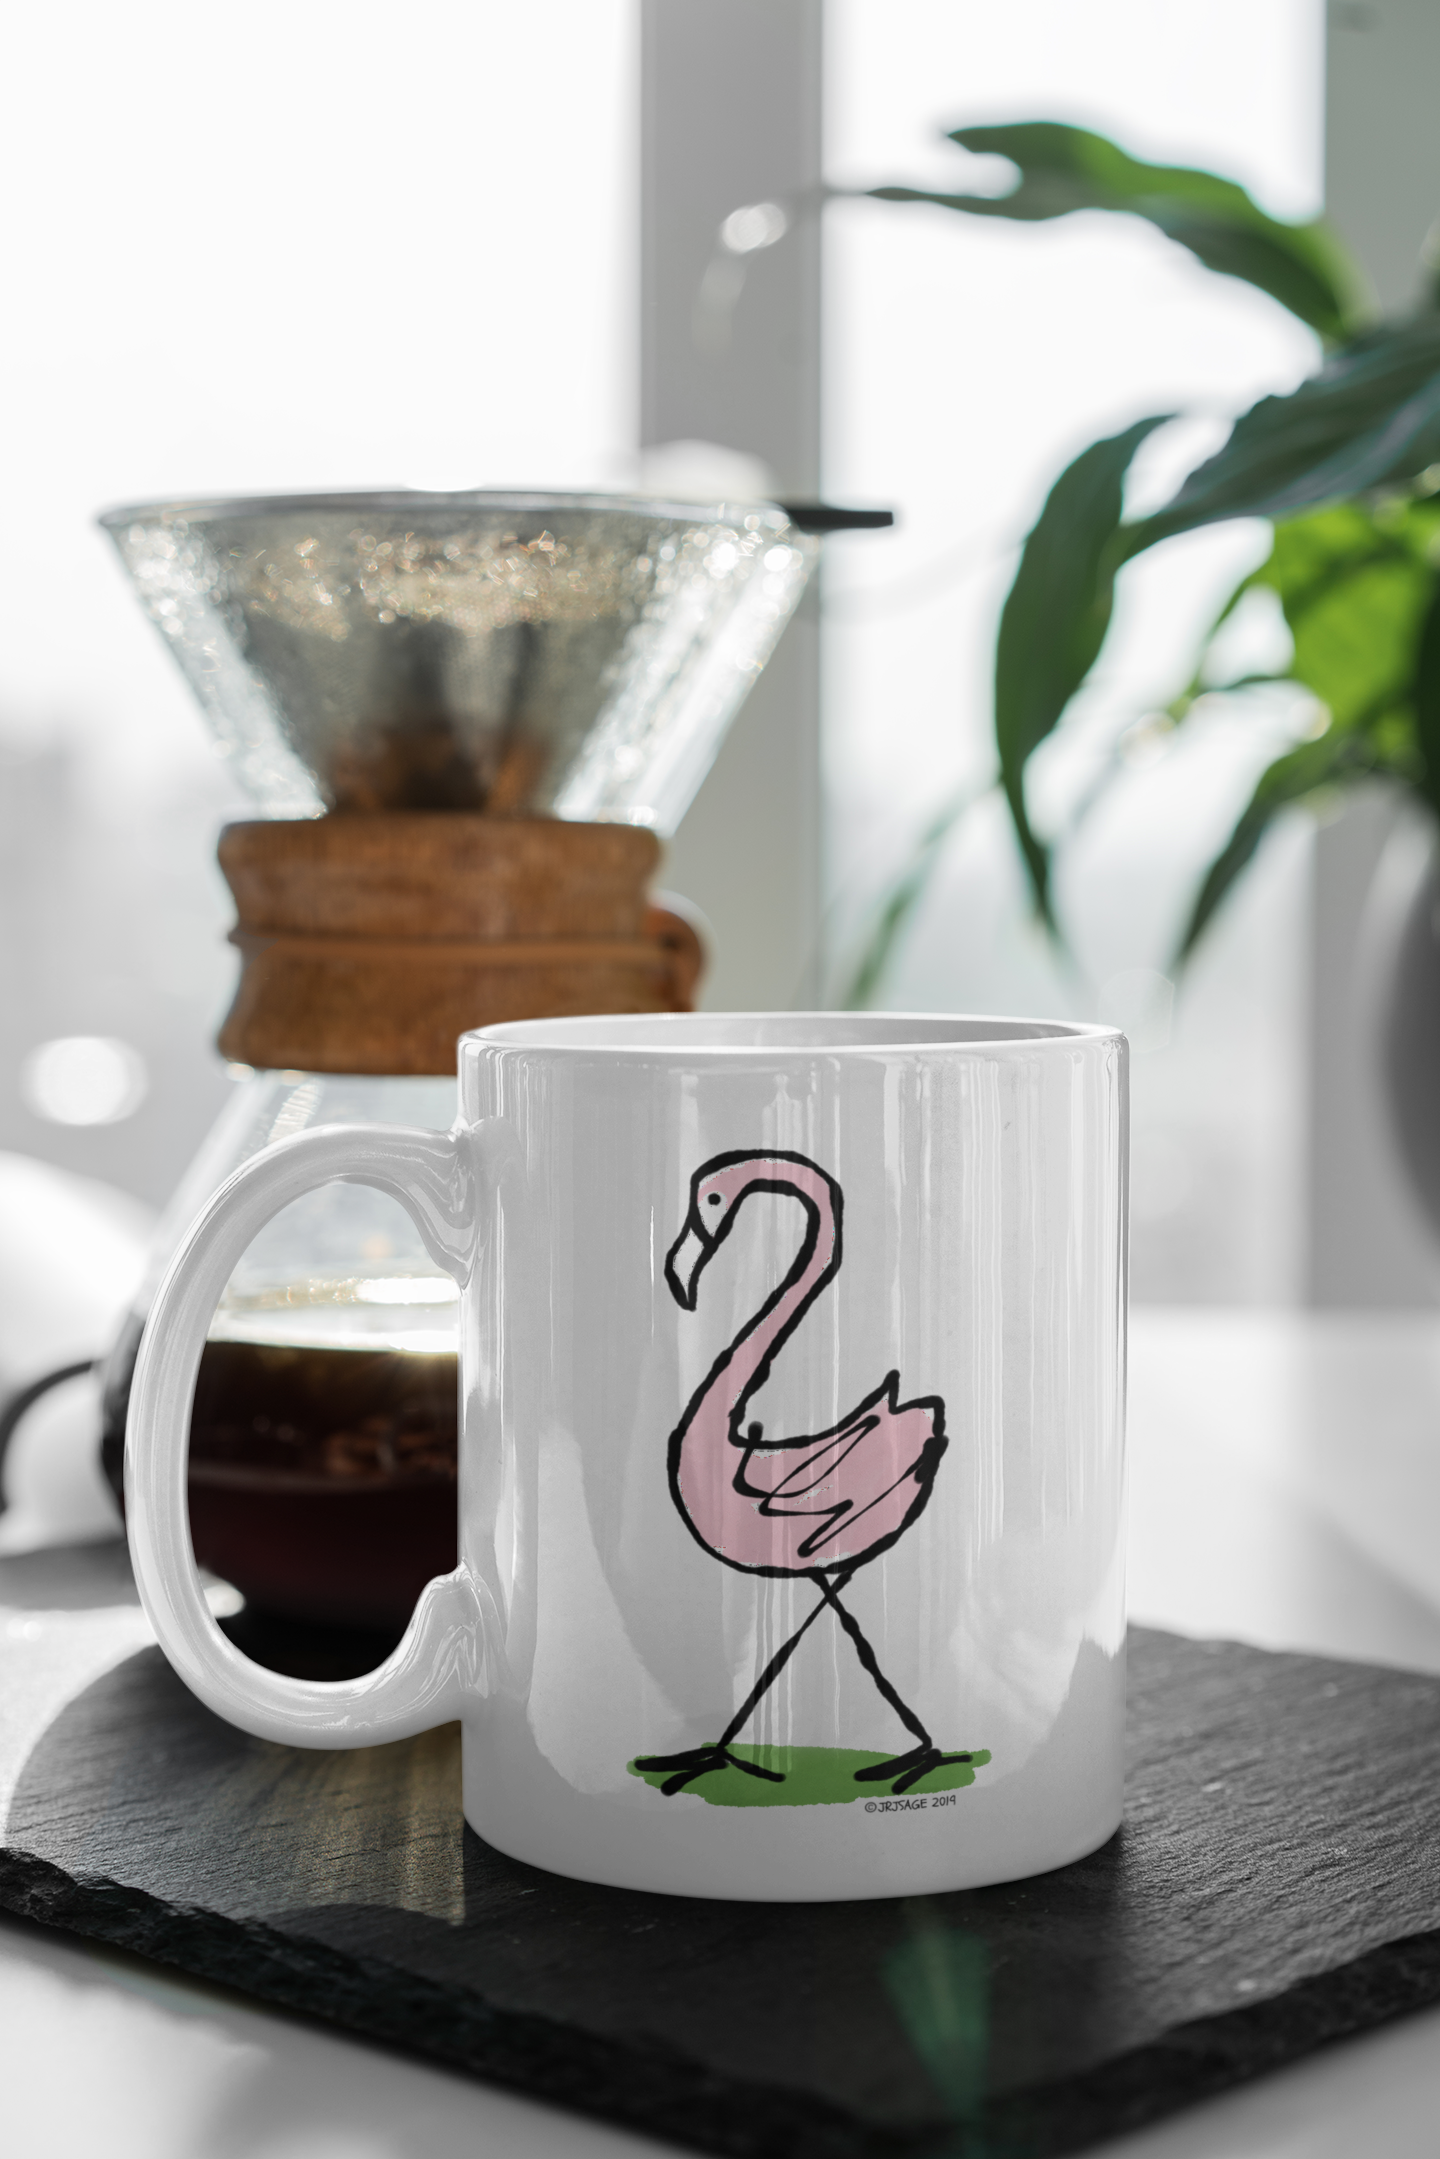 Pink Flamingo mug - Original cute Flamingo illustrated coffee mug by Hector and Bone on a table